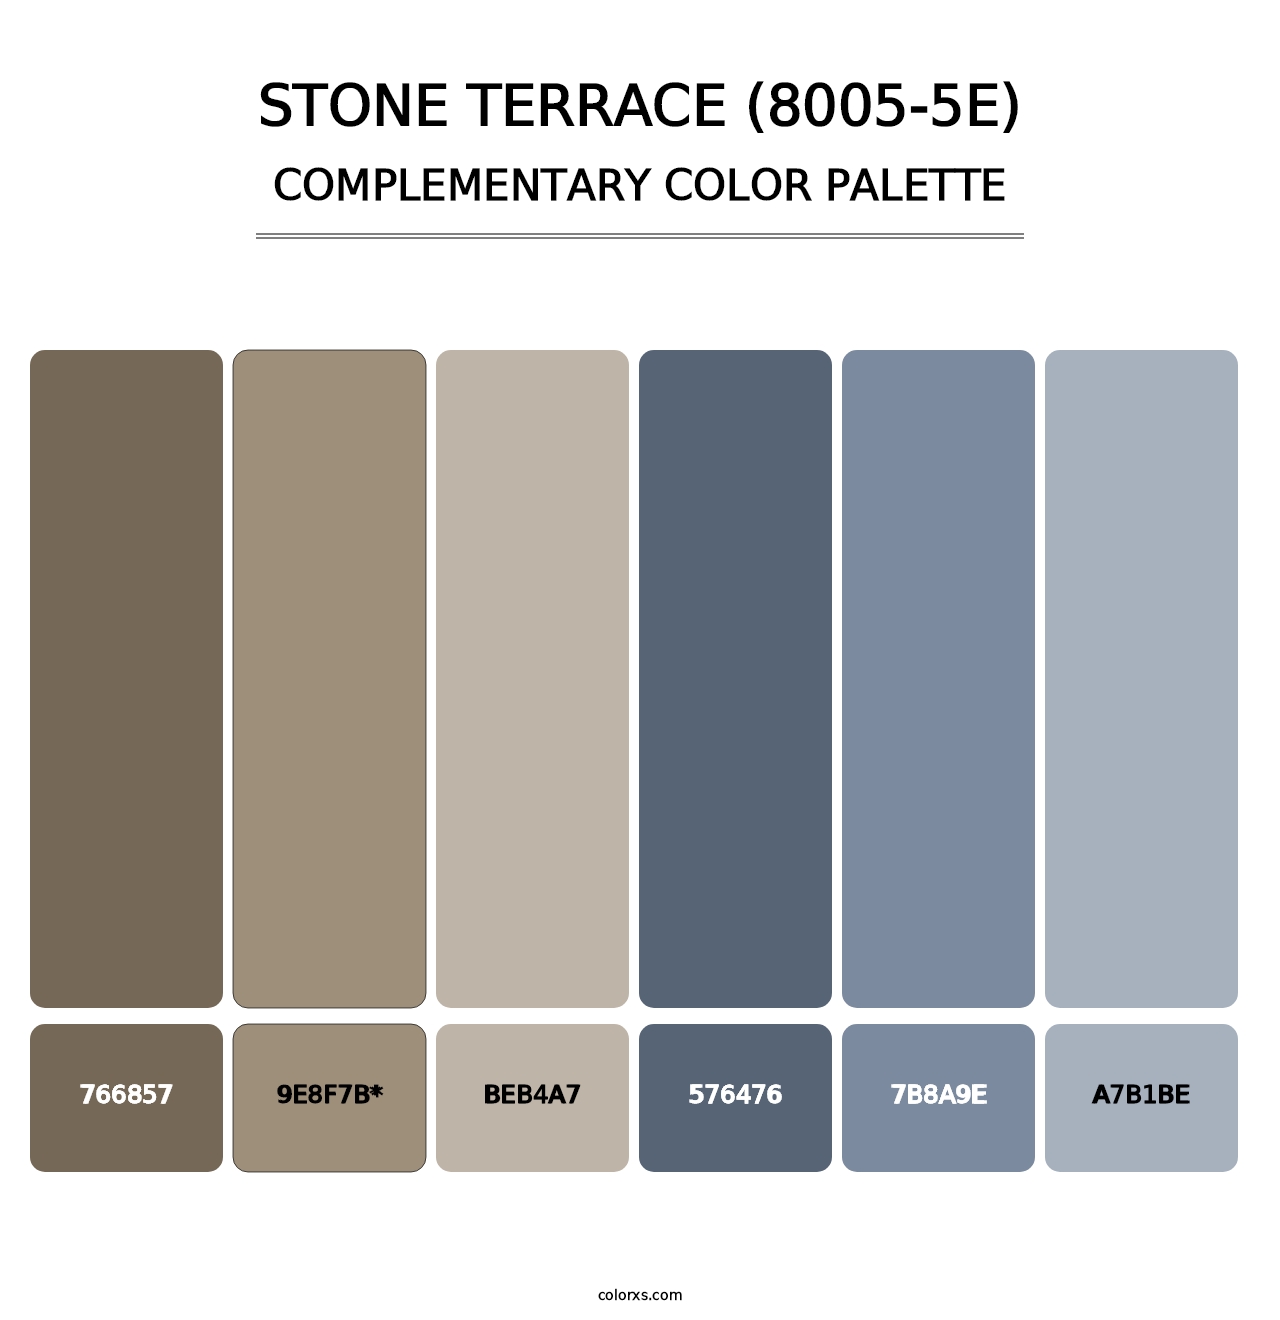 Stone Terrace (8005-5E) - Complementary Color Palette